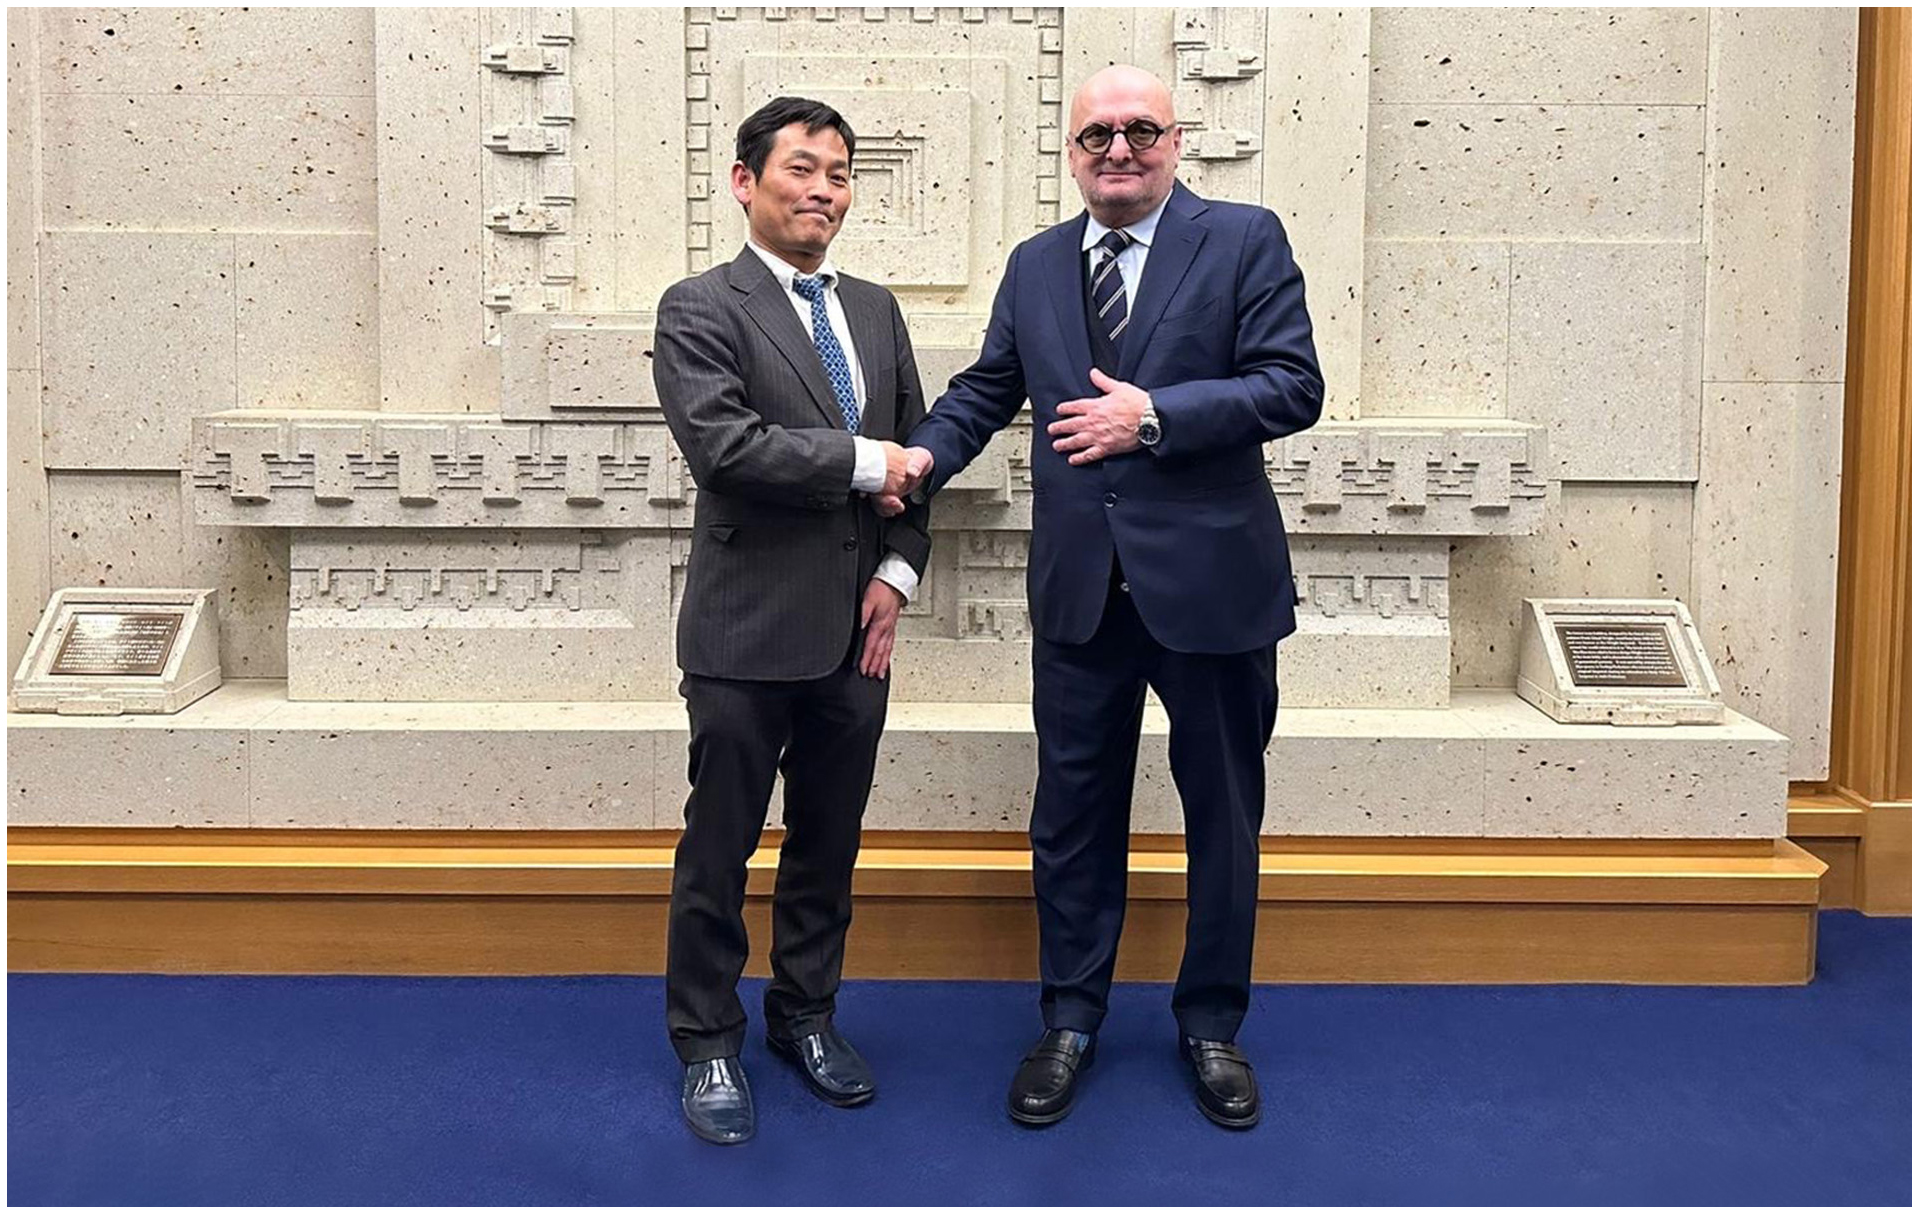 Makoto Kohda and Ezio Cavagna shaking hands, celebrating their business deal.